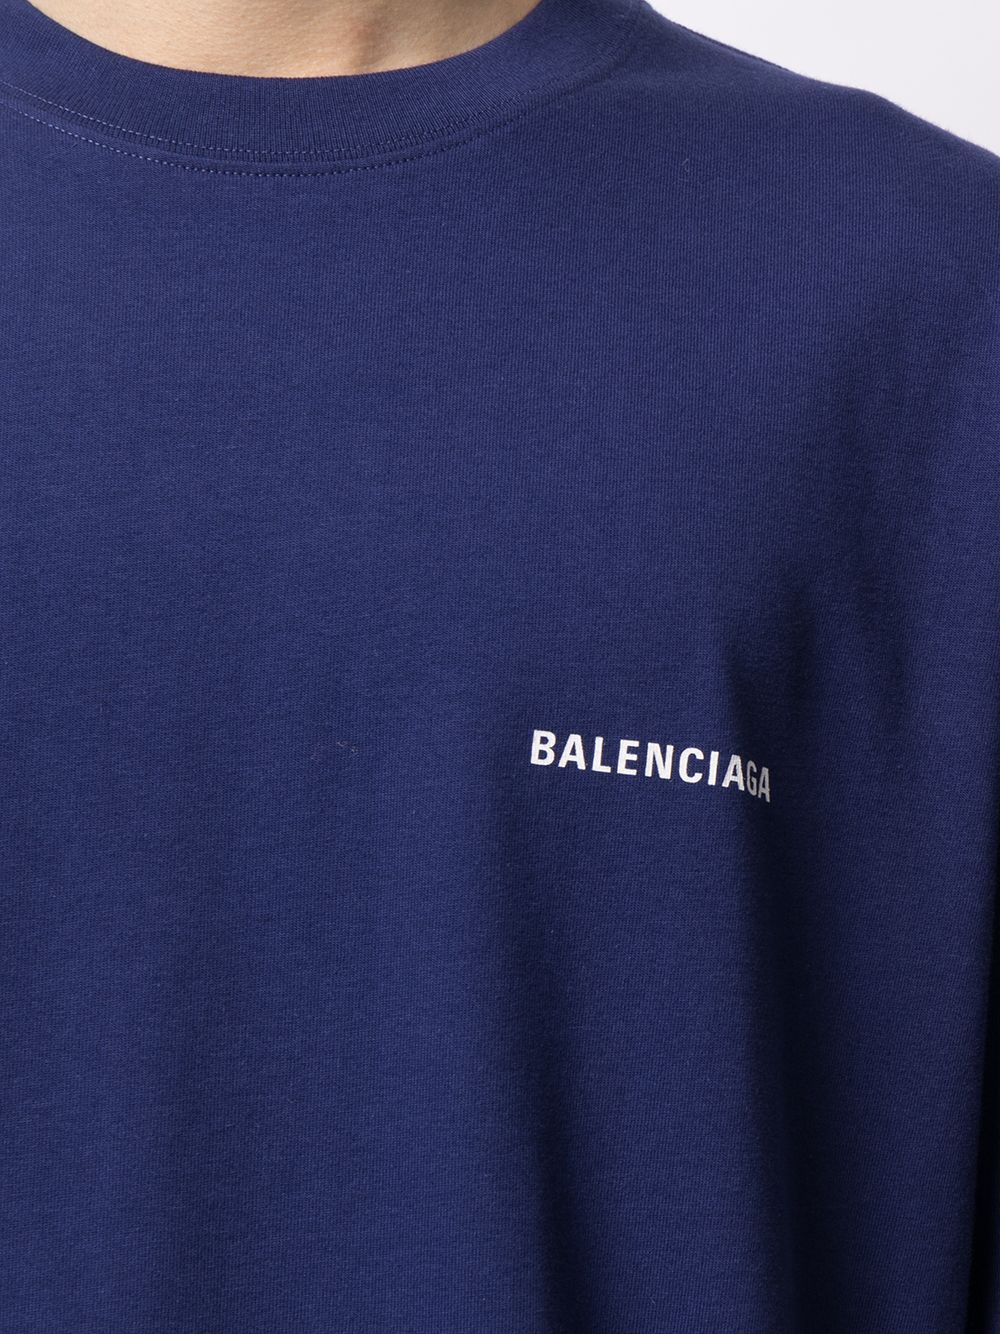 Balenciaga BB Interlock Baby Blue Tee Shirt Mens Fashion Tops  Sets  Tshirts  Polo Shirts on Carousell